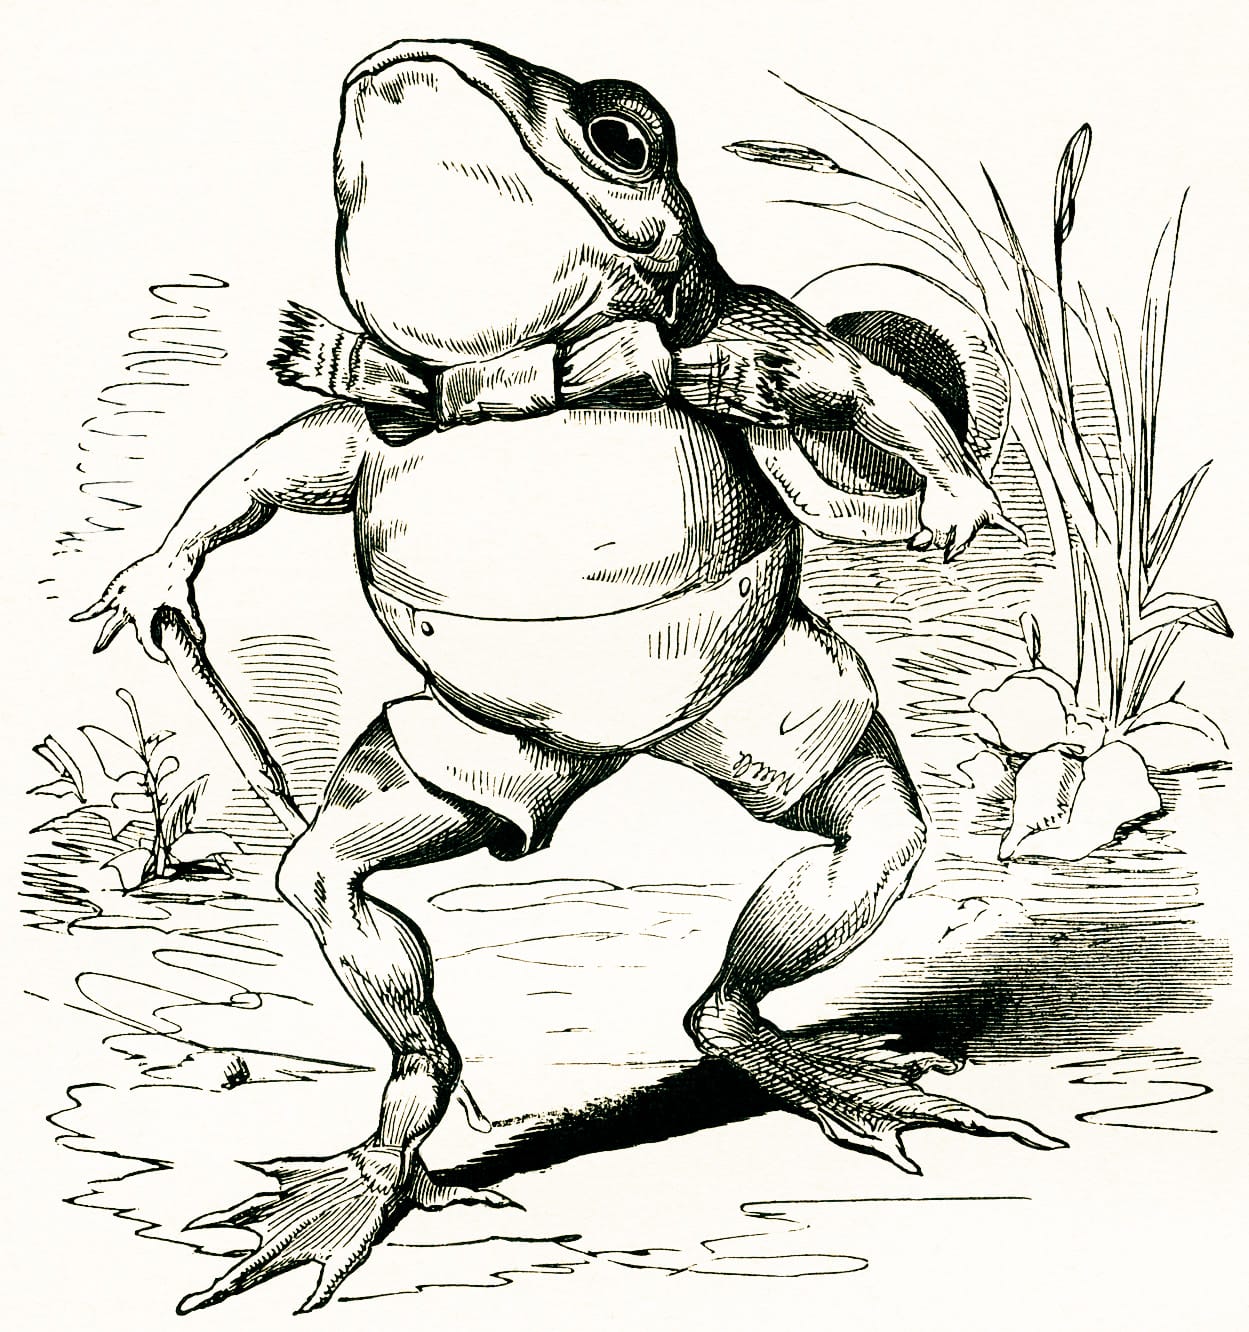 public domain frog illustration 12